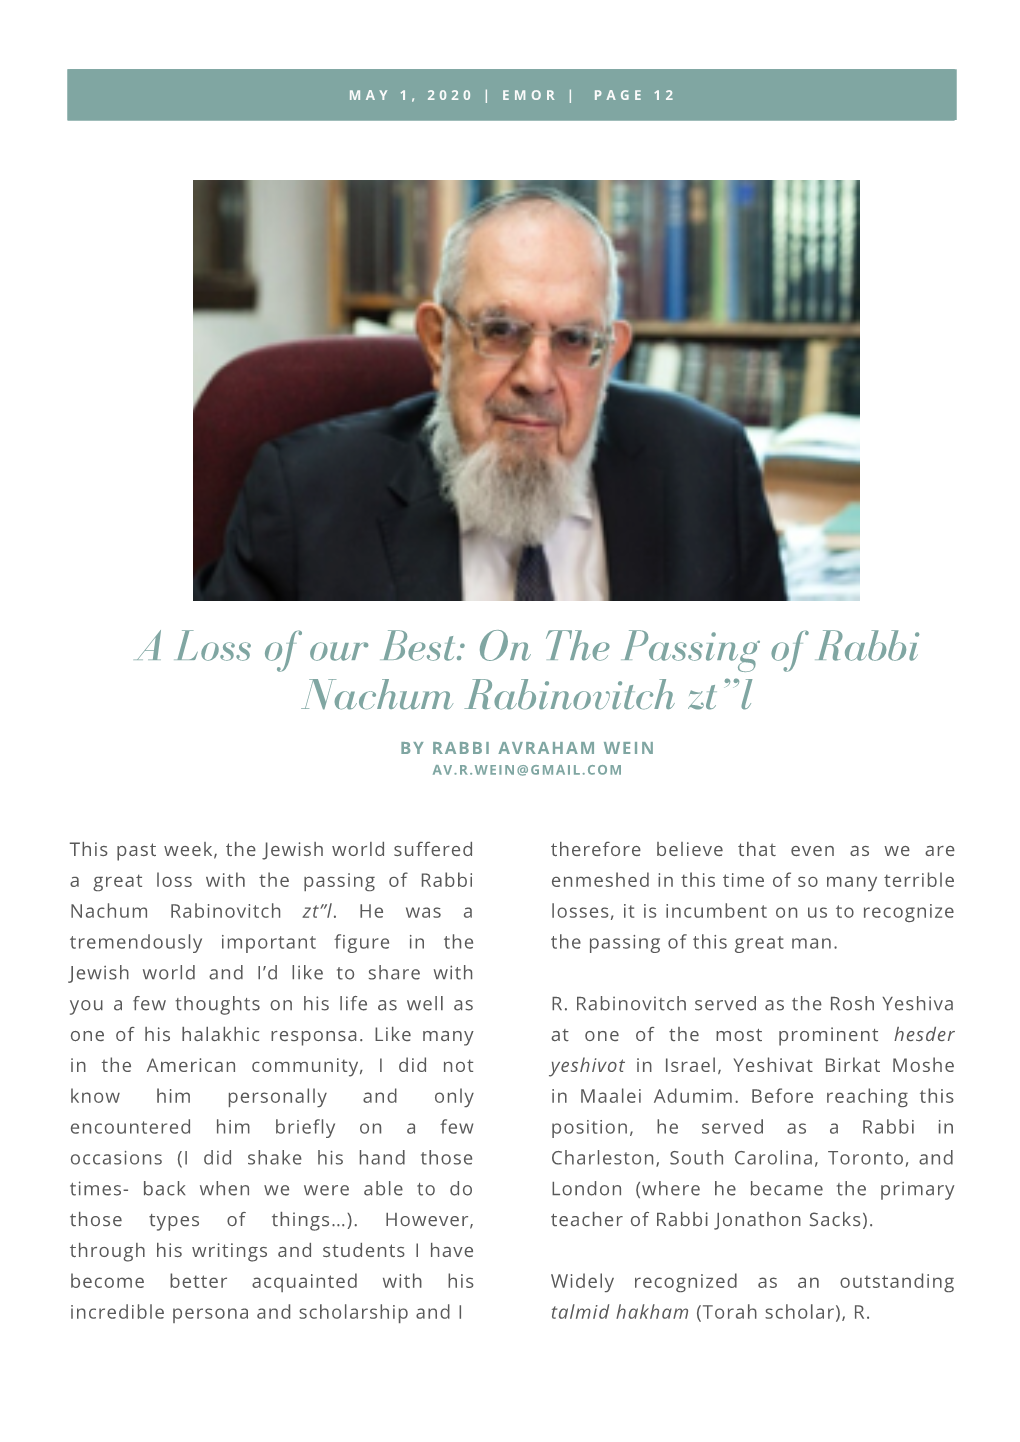 On the Passing of Rabbi Nachum Rabinovitch Zt”L